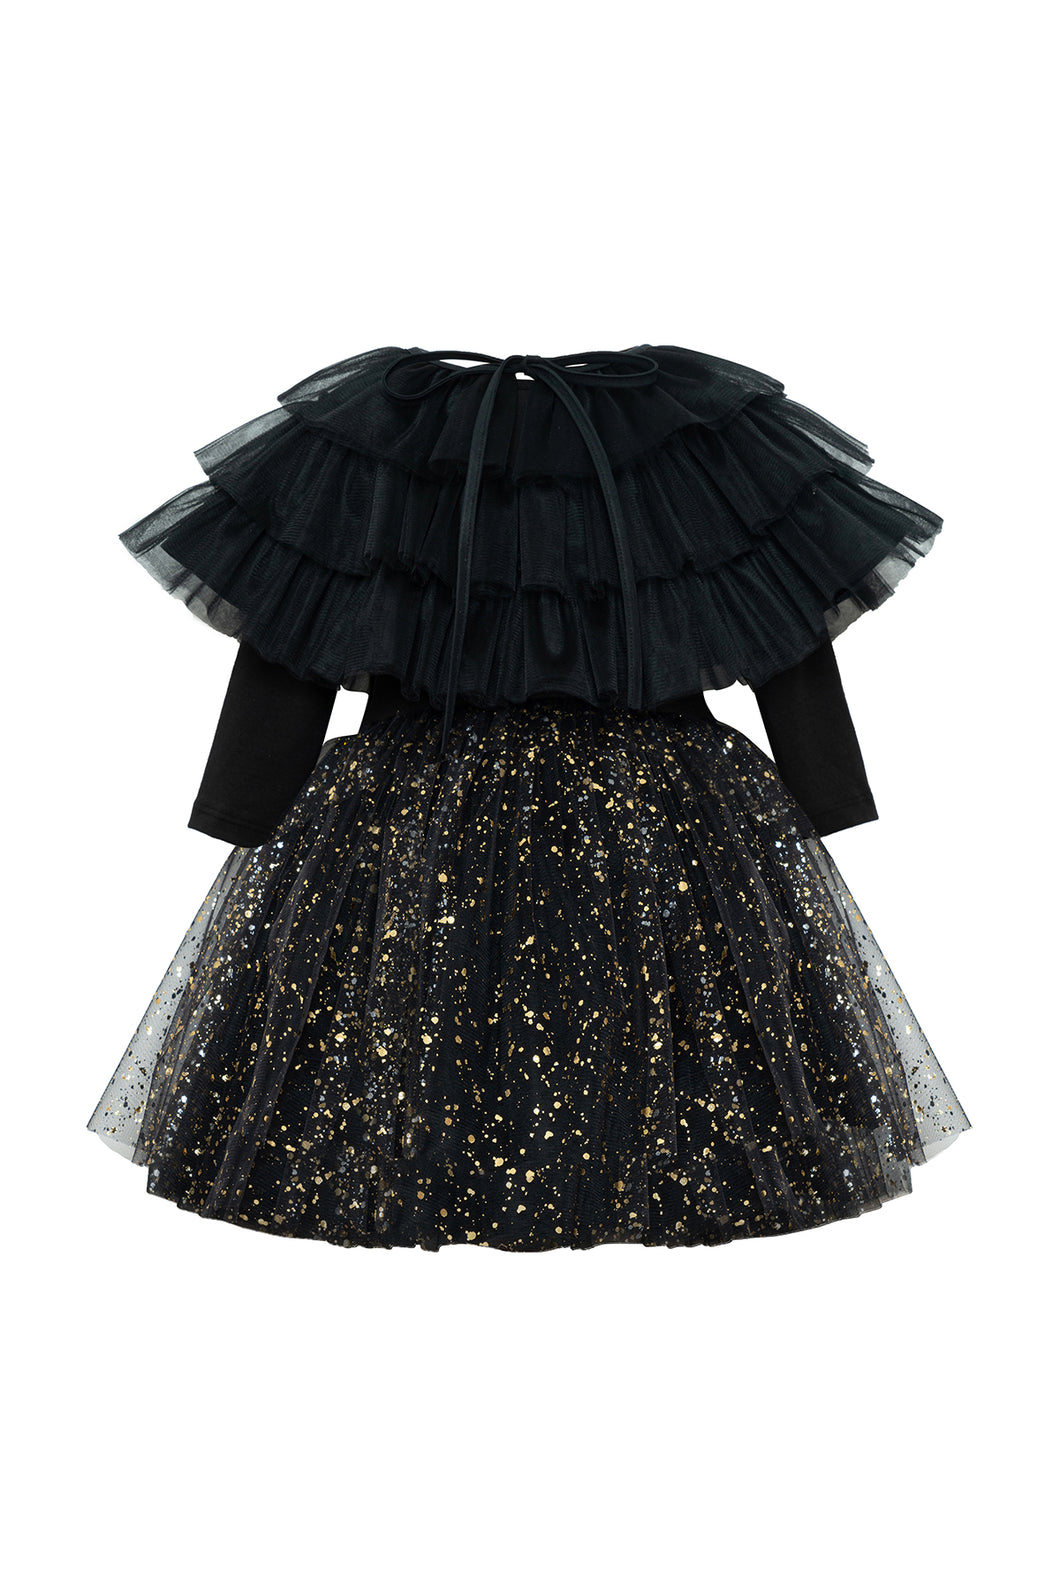 Sparkle Black Dress Set